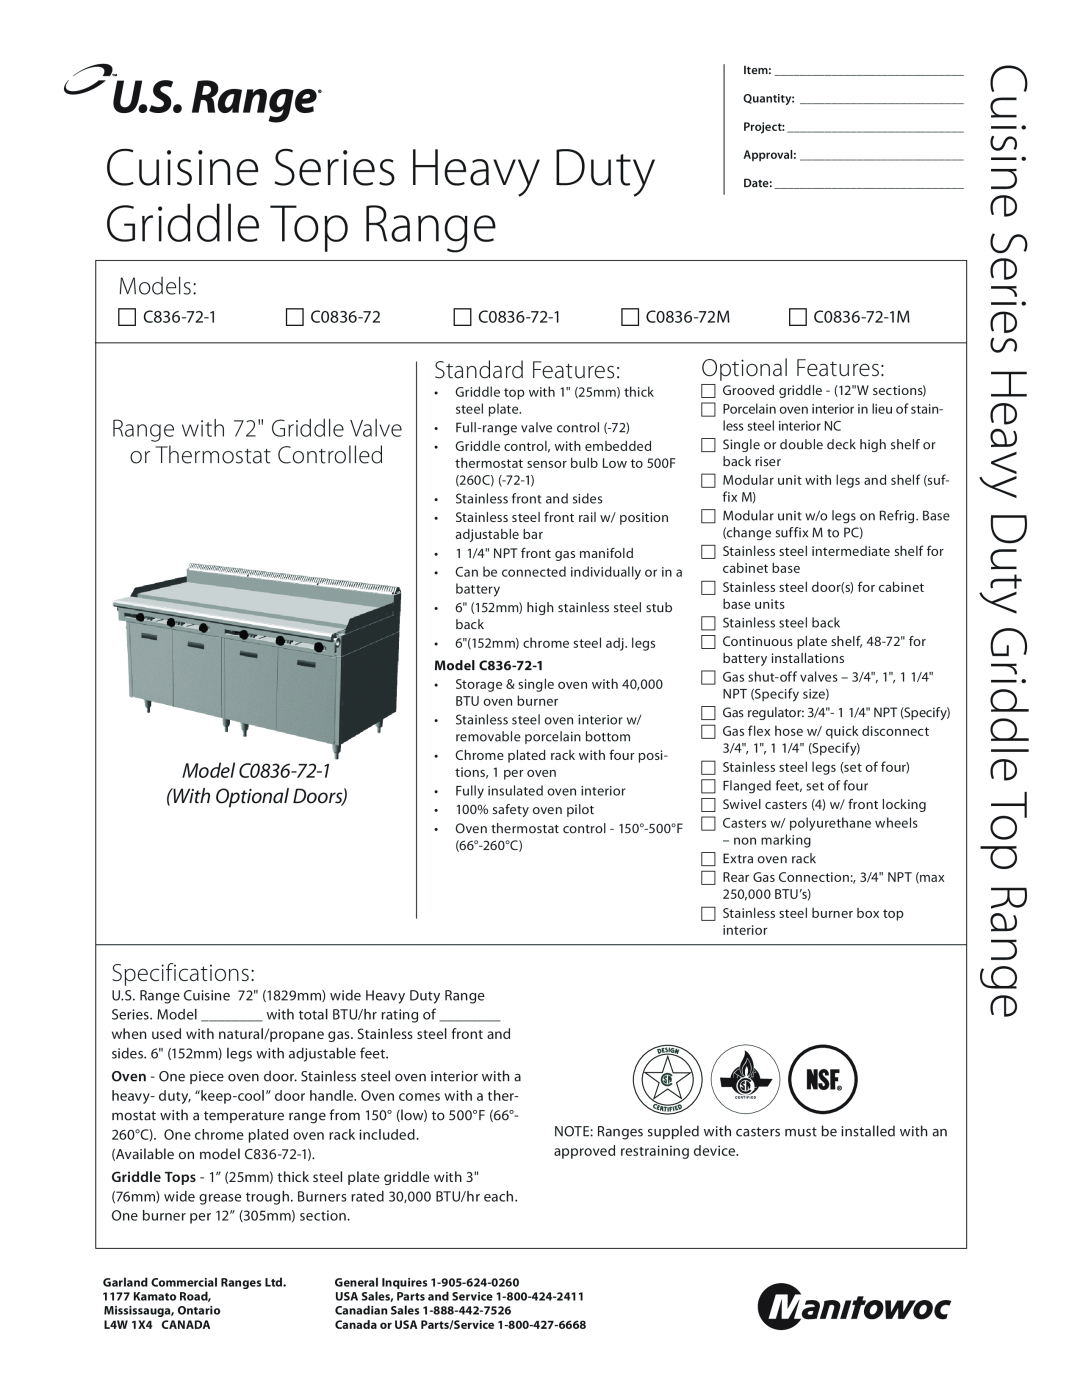 Manitowoc Ice specifications Cuisine, Range with 72 Griddle Valve,  C836-72-1,  C0836-72-1,  C0836-72M, Series 